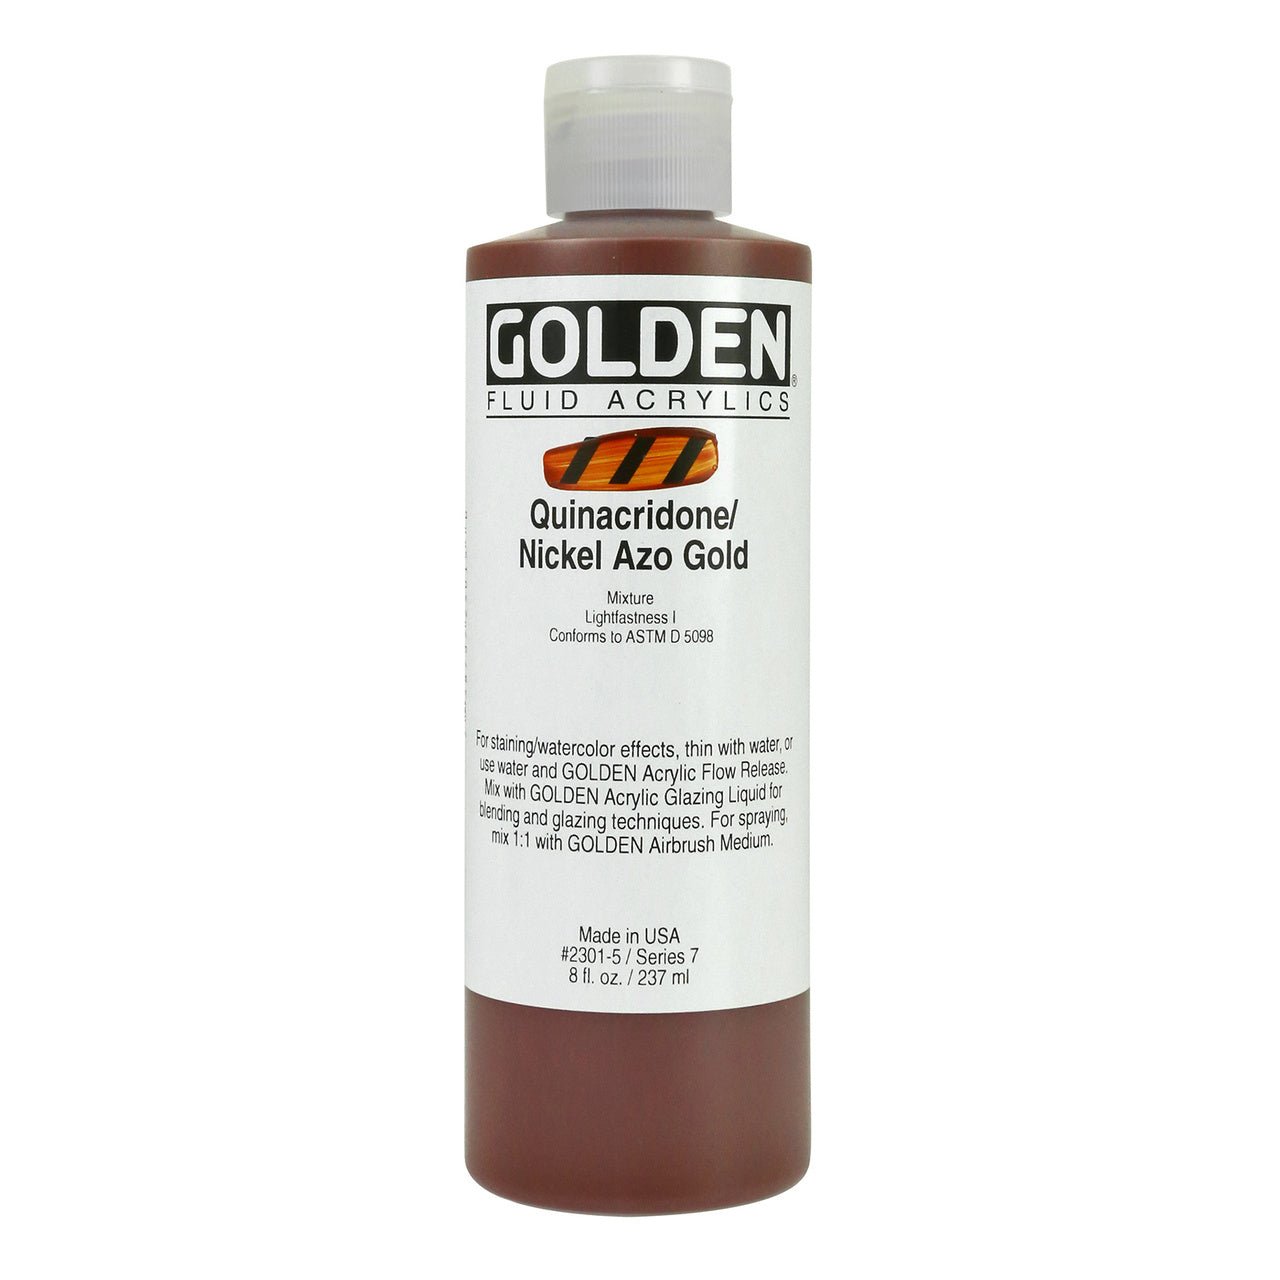 Golden Fluid Acrylic Quinacridone Nickel Azo Gold 8 oz - merriartist.com